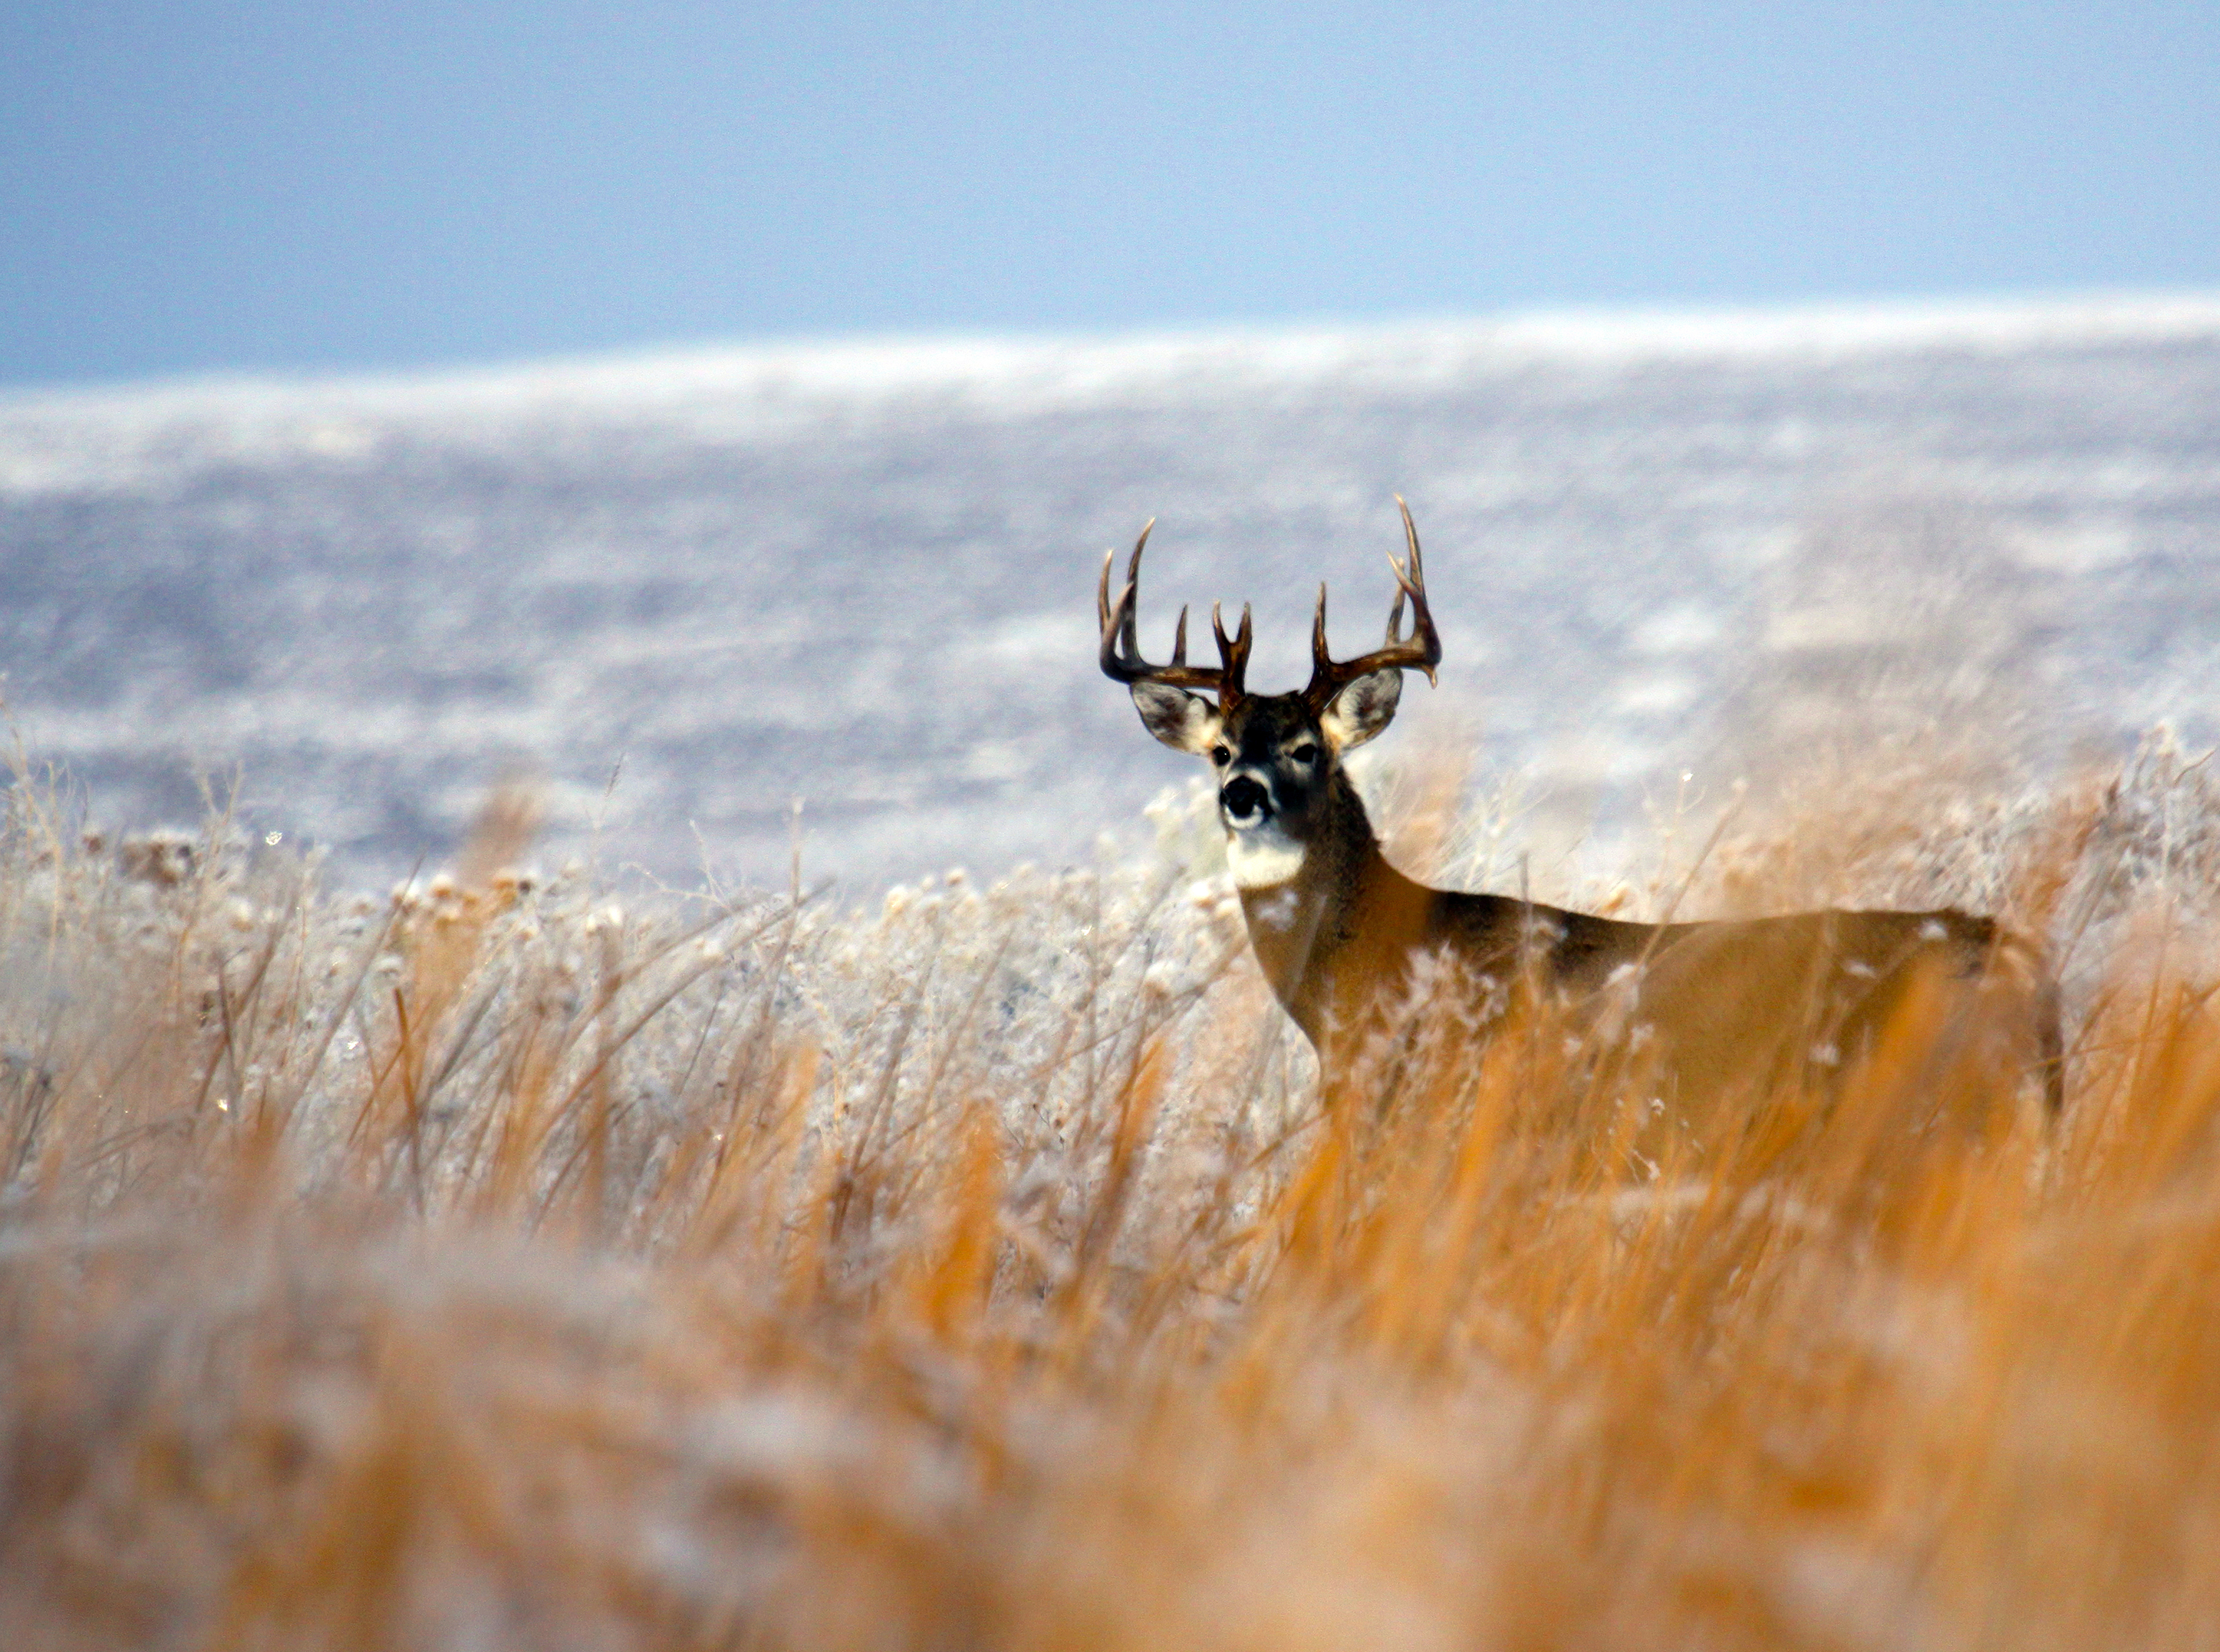 mule deer buck in snow and grass medium shot December 2012